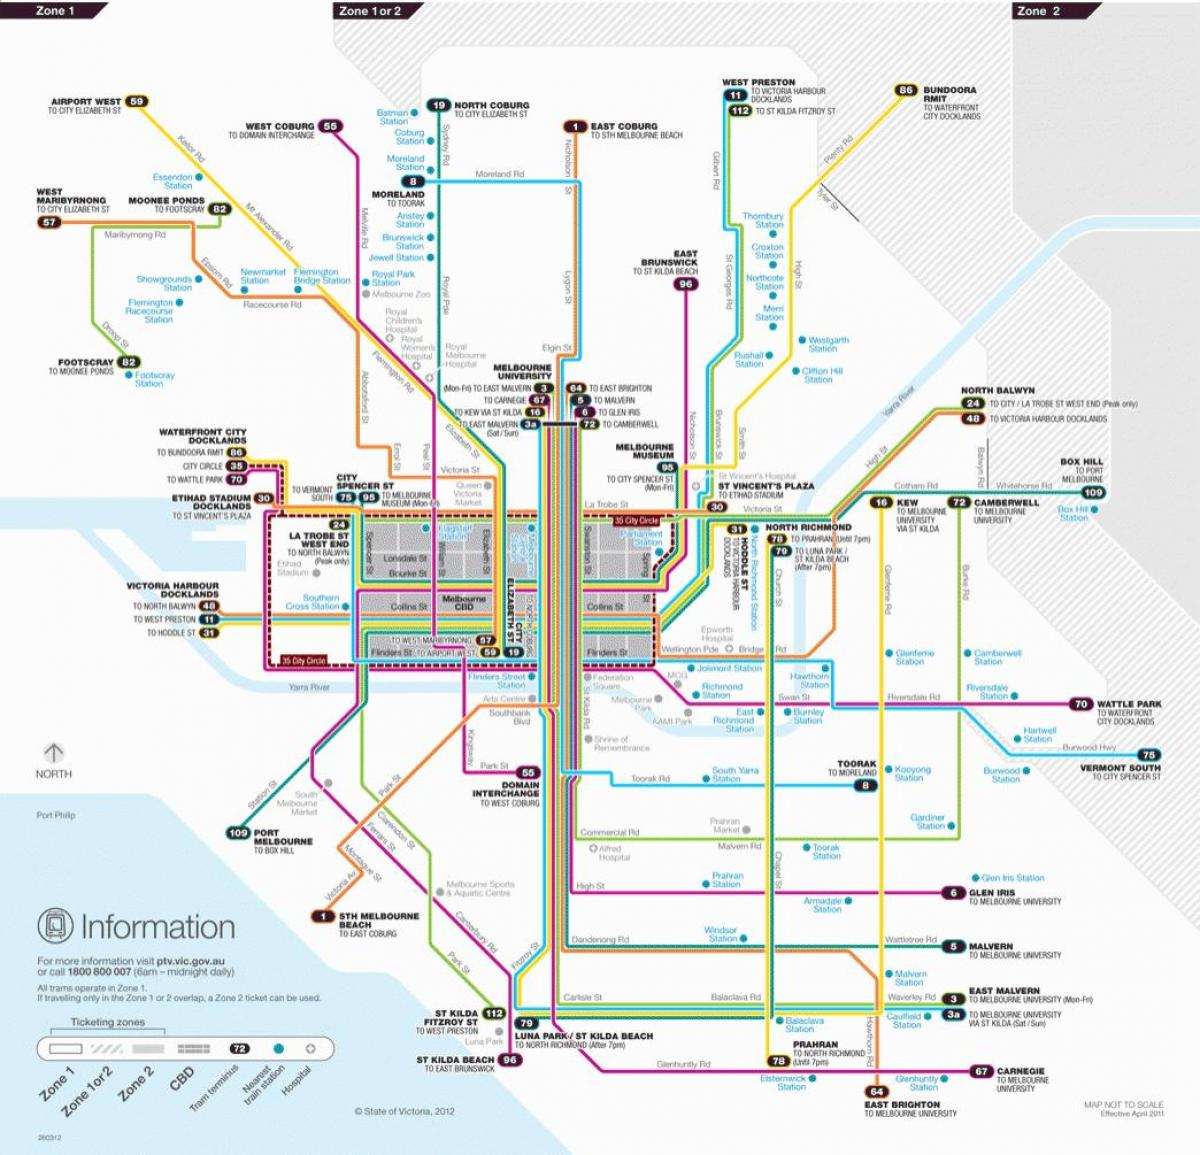 Melbourne tramvaj put na karti